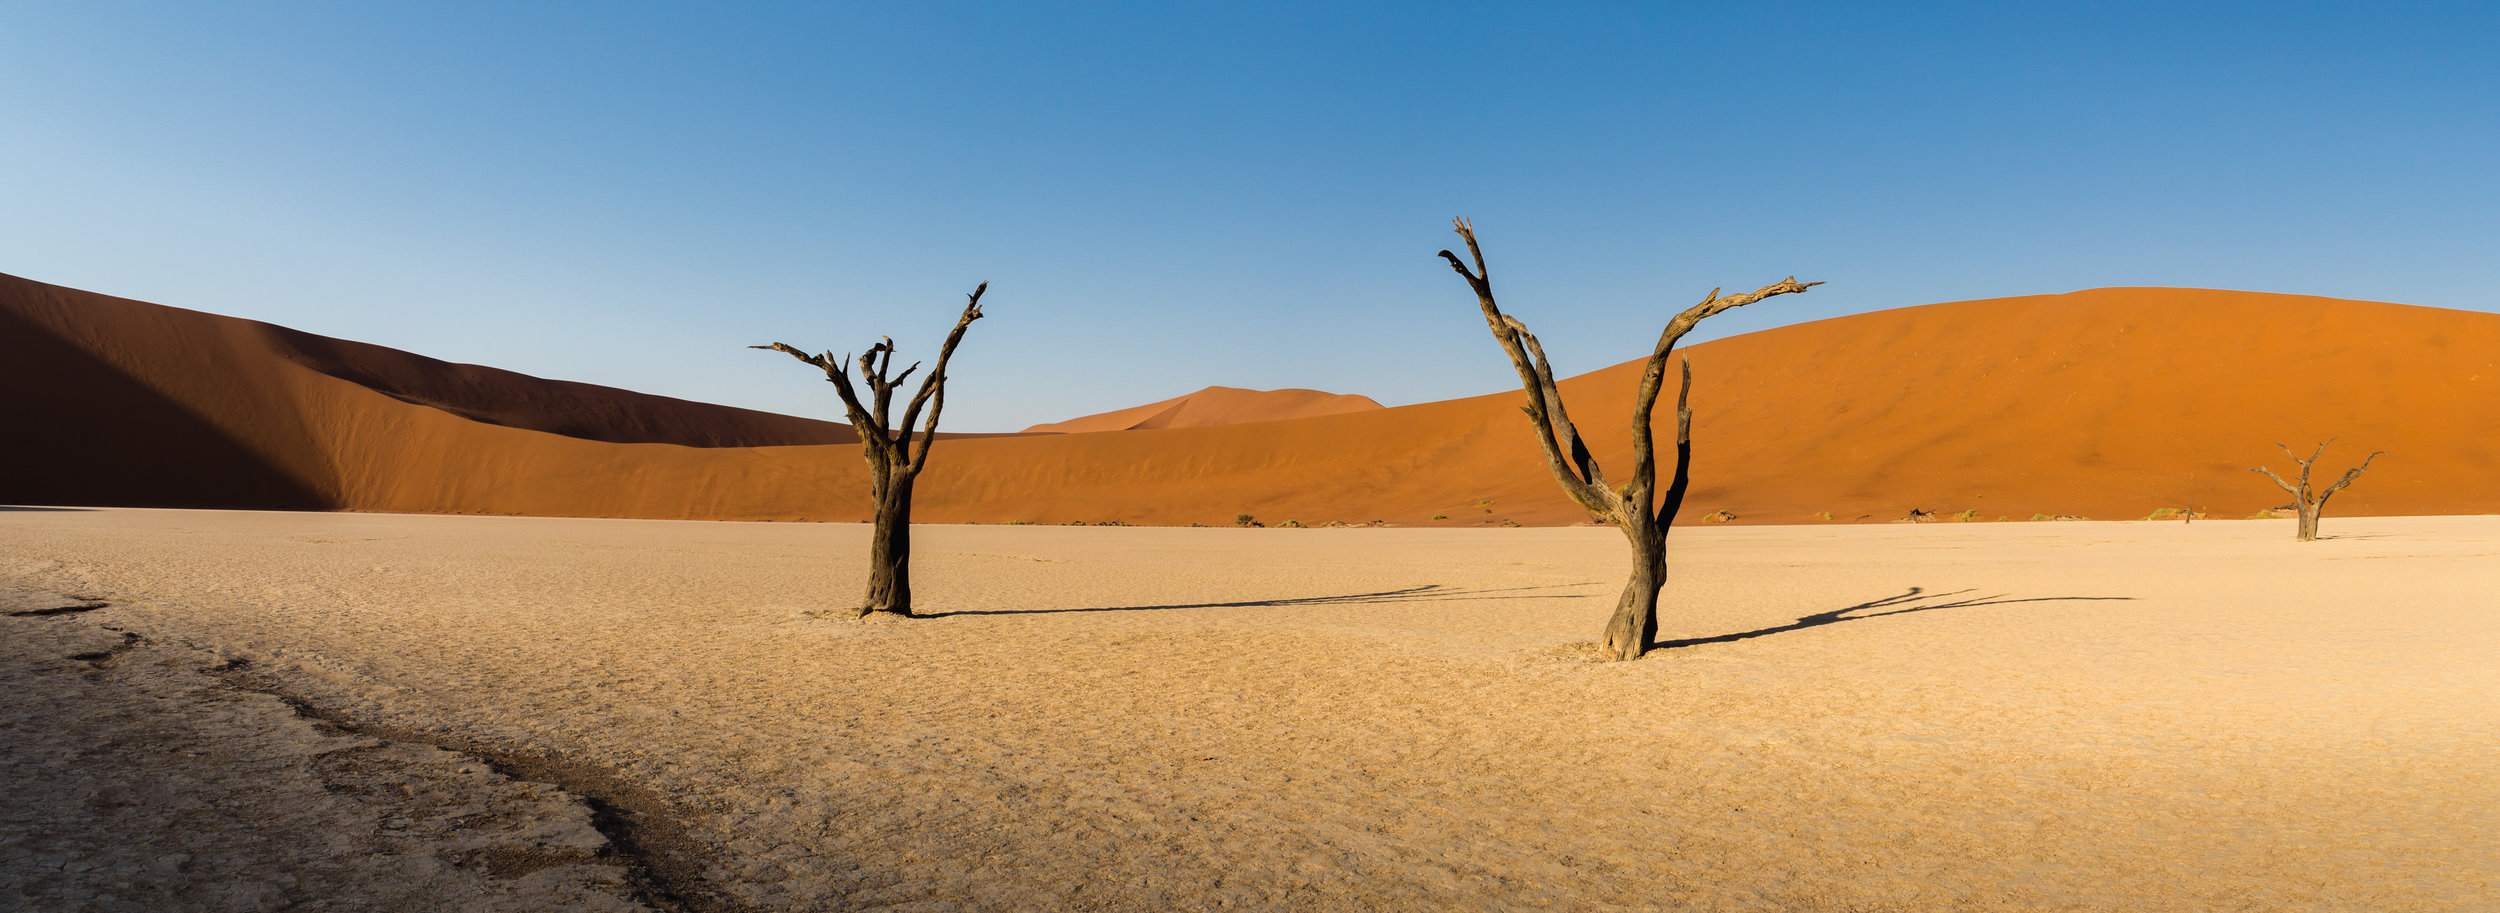 Across The Pan. Deadvlei, Namibia (Aug. 2019)